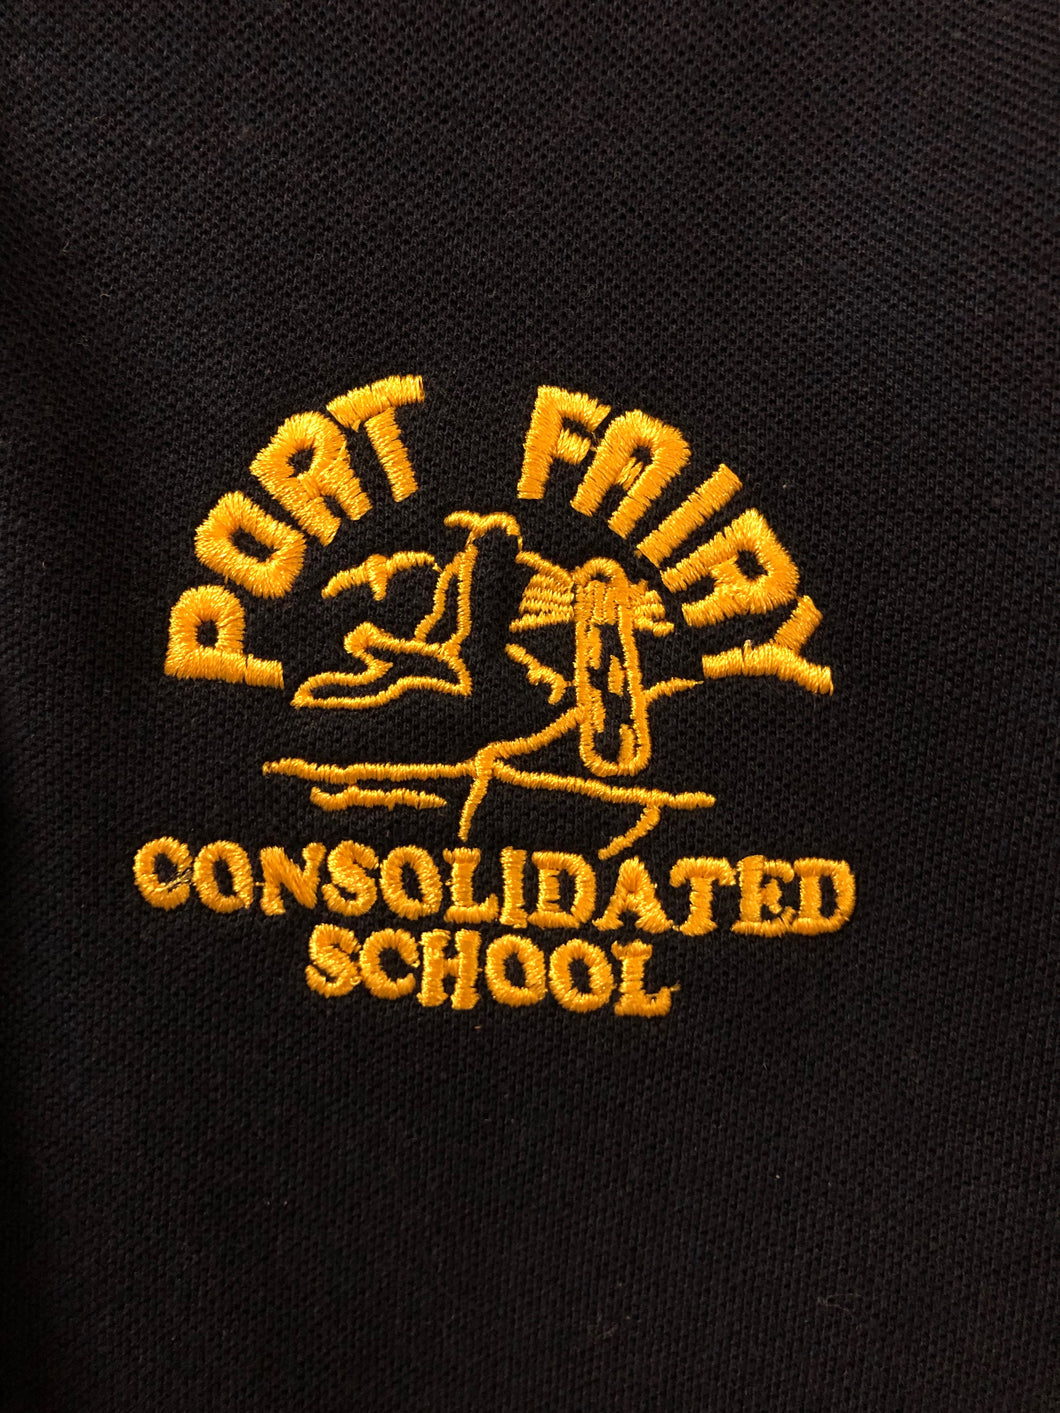 School Polos Port Fairy Consolidated School